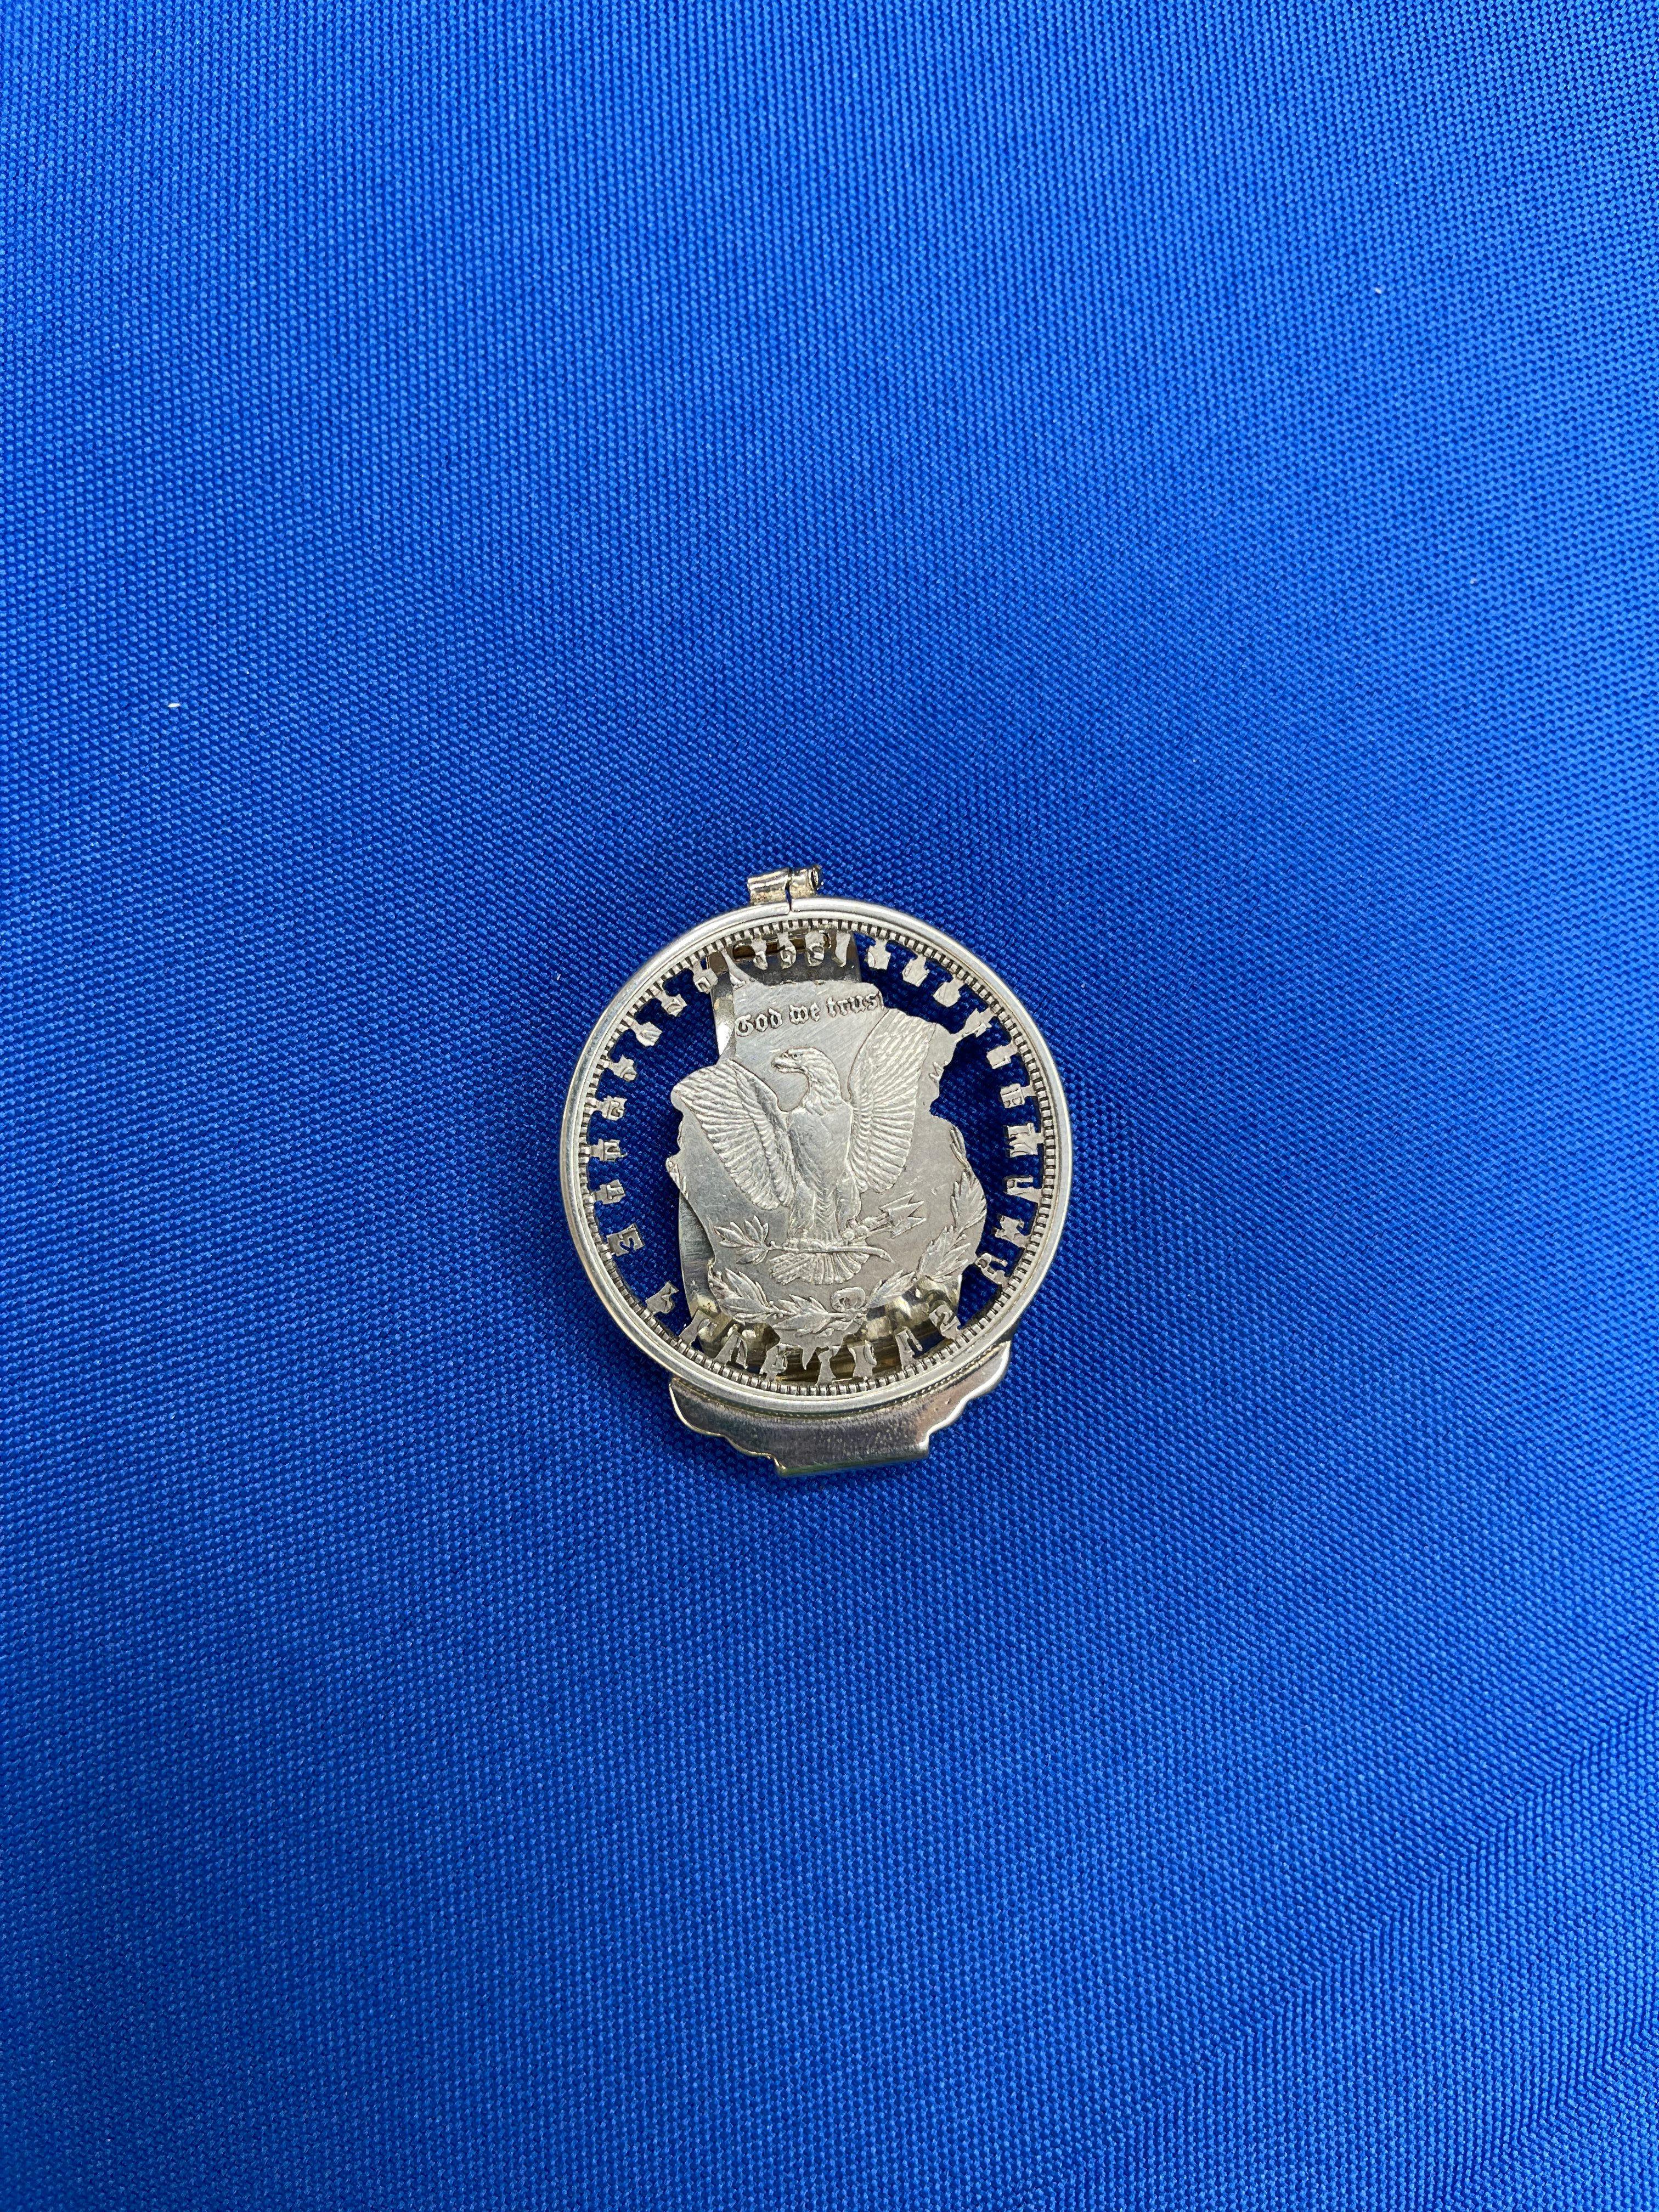 rhodium coin